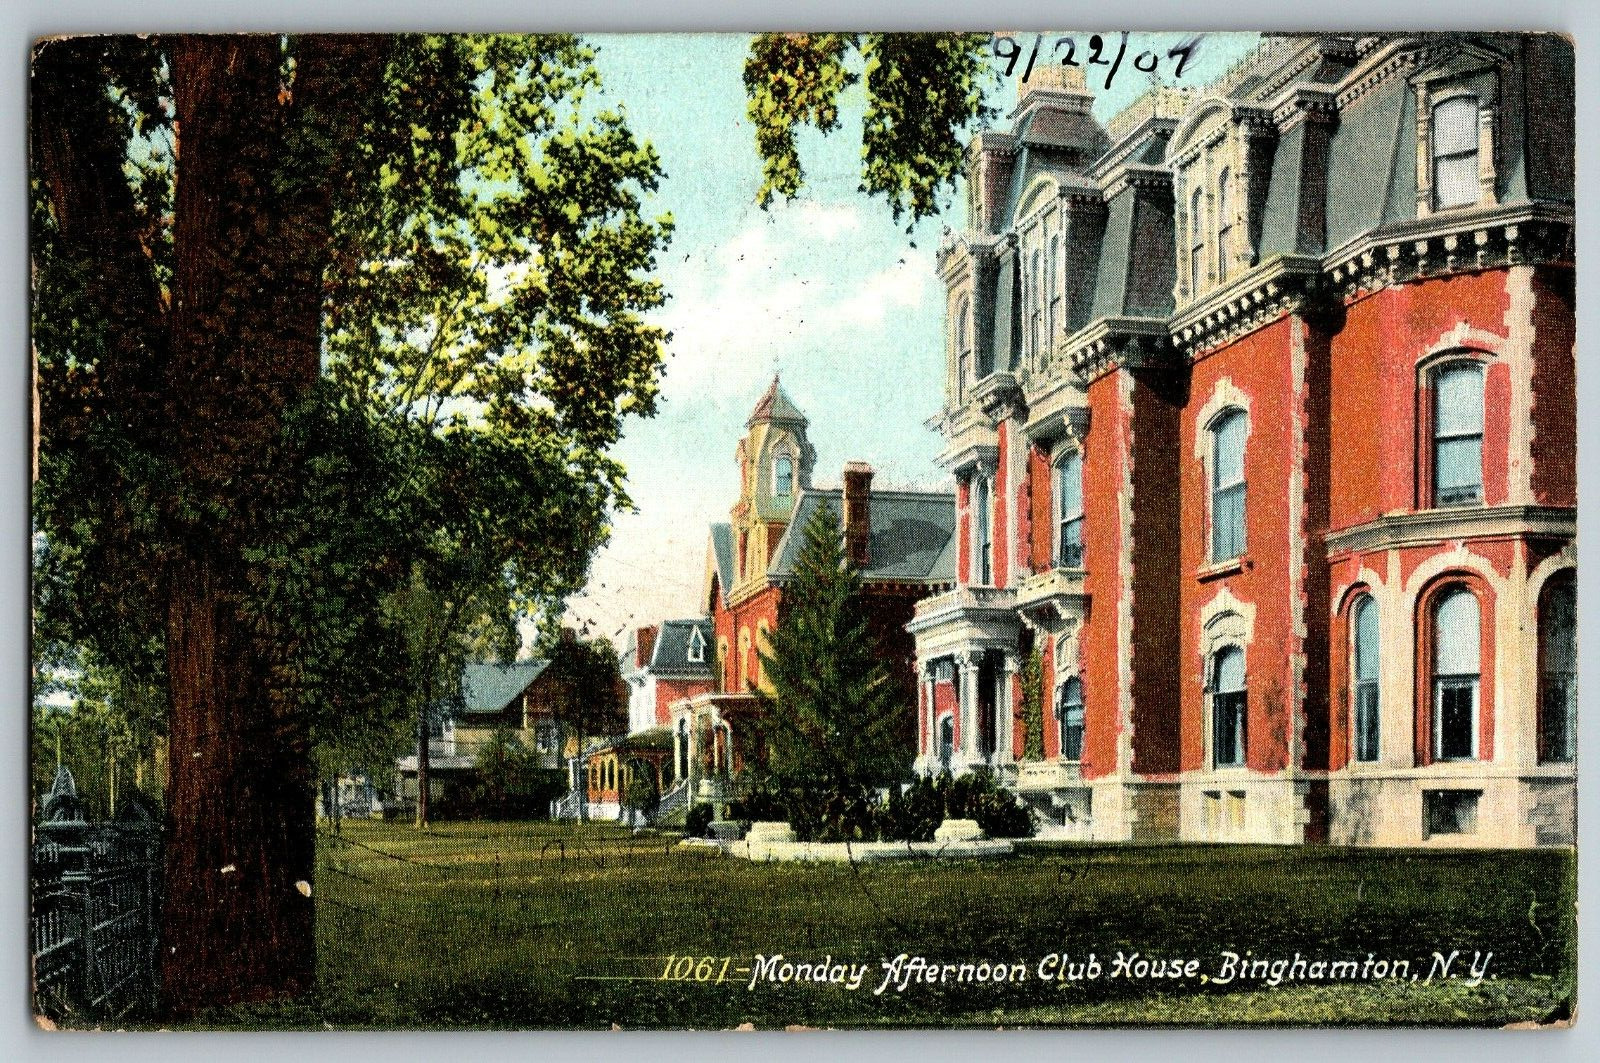 Binghamton, New York - Monday Afternoon Club House - Vintage Postcard - Posted